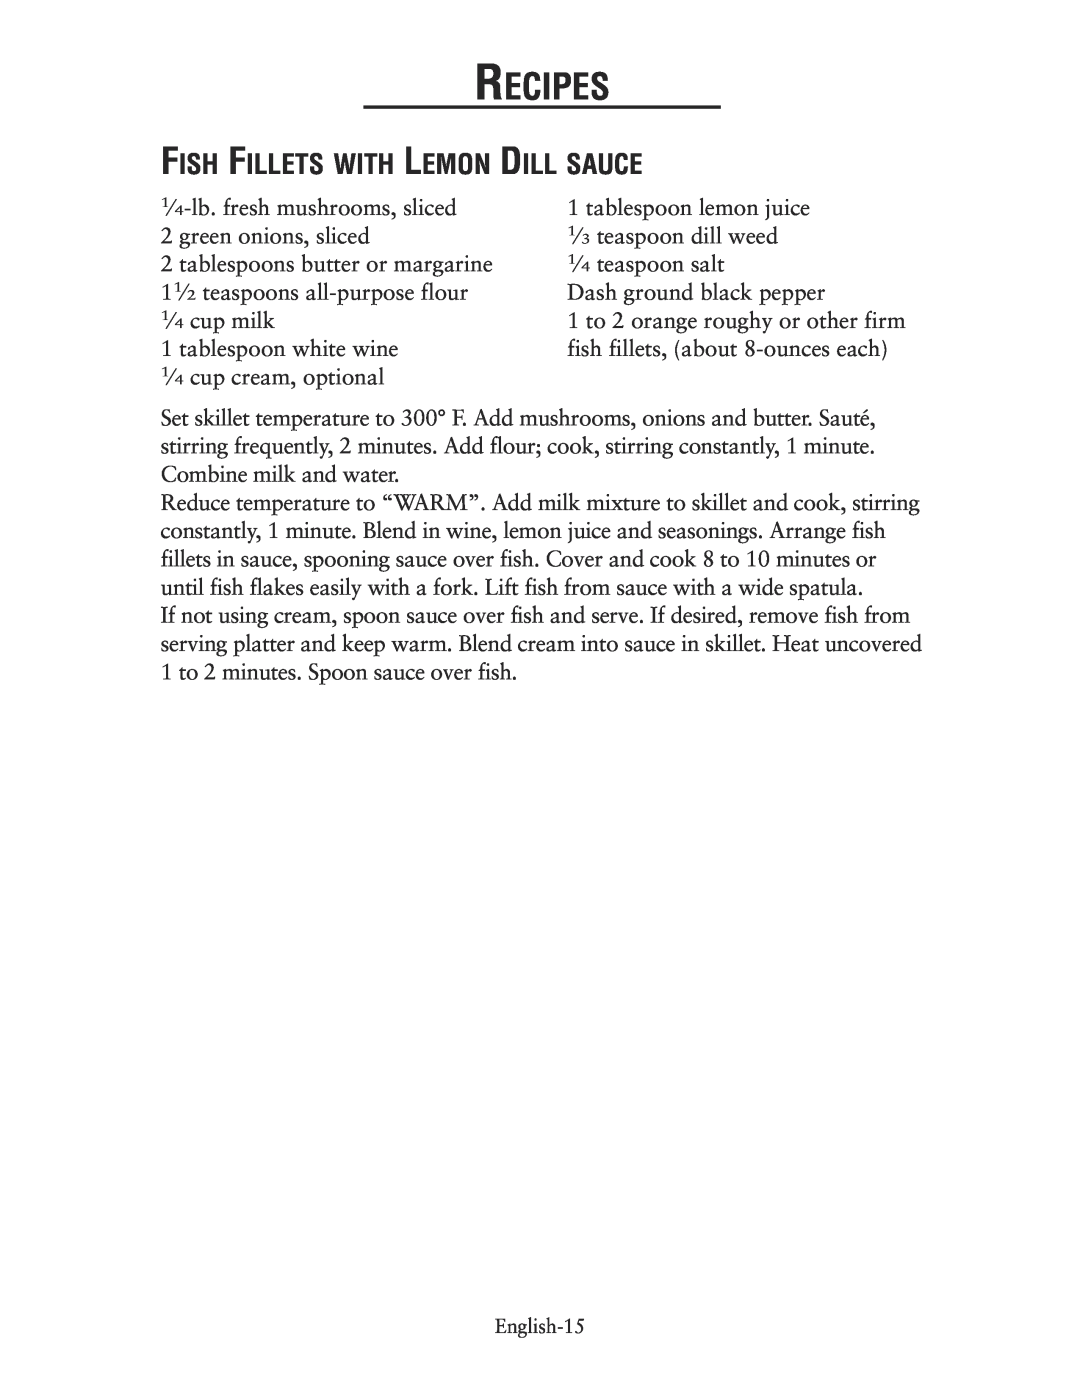 Oster CKSTSKRM20 user manual Fish Fillets With Lemon Dill Sauce, Recipes 